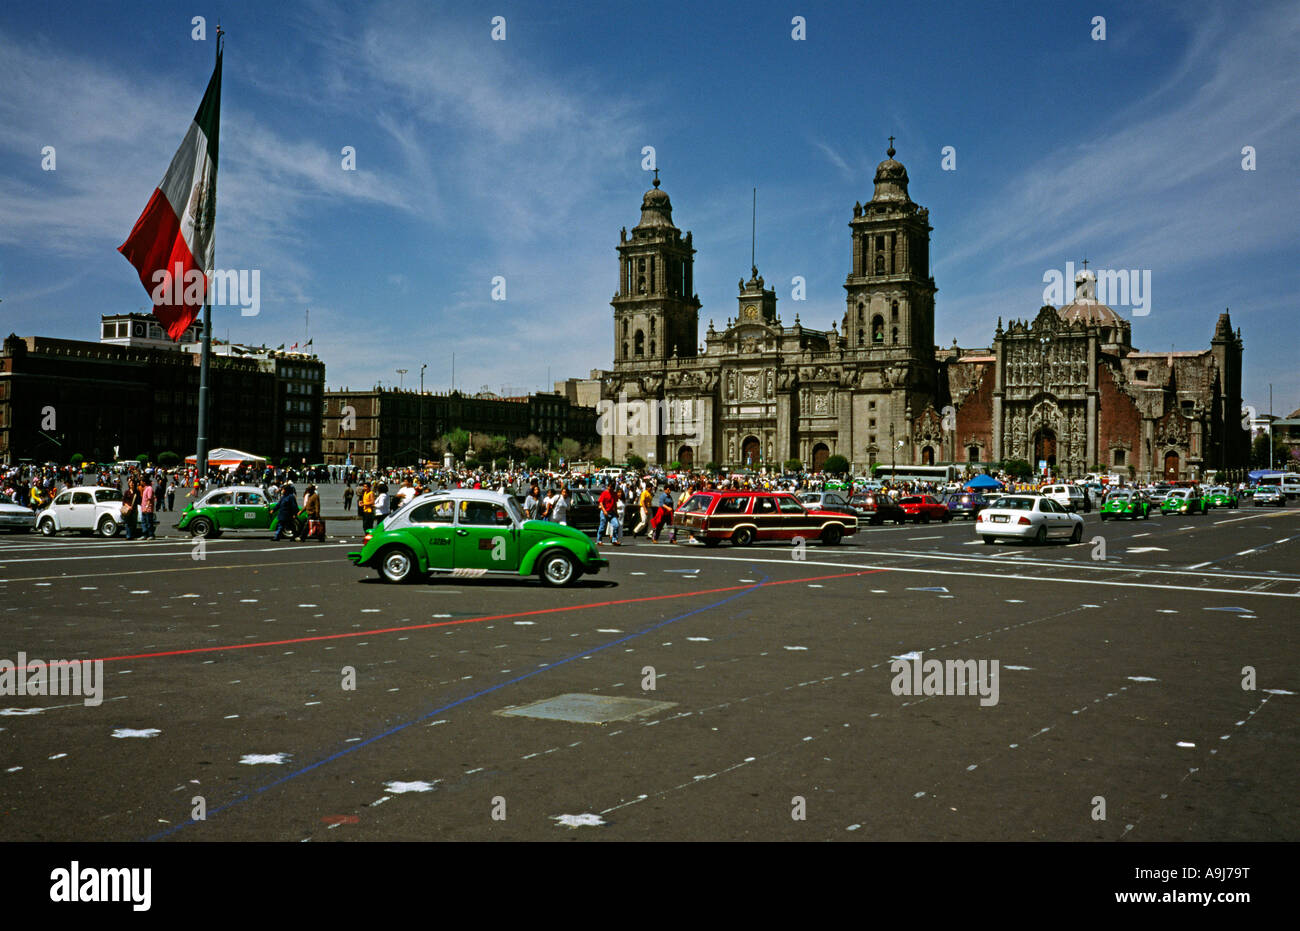 3 marzo 2002 - Volkswagen maggiolino taxi a la Plaza de la Constitución (Zocalo) in Città del Messico Foto Stock